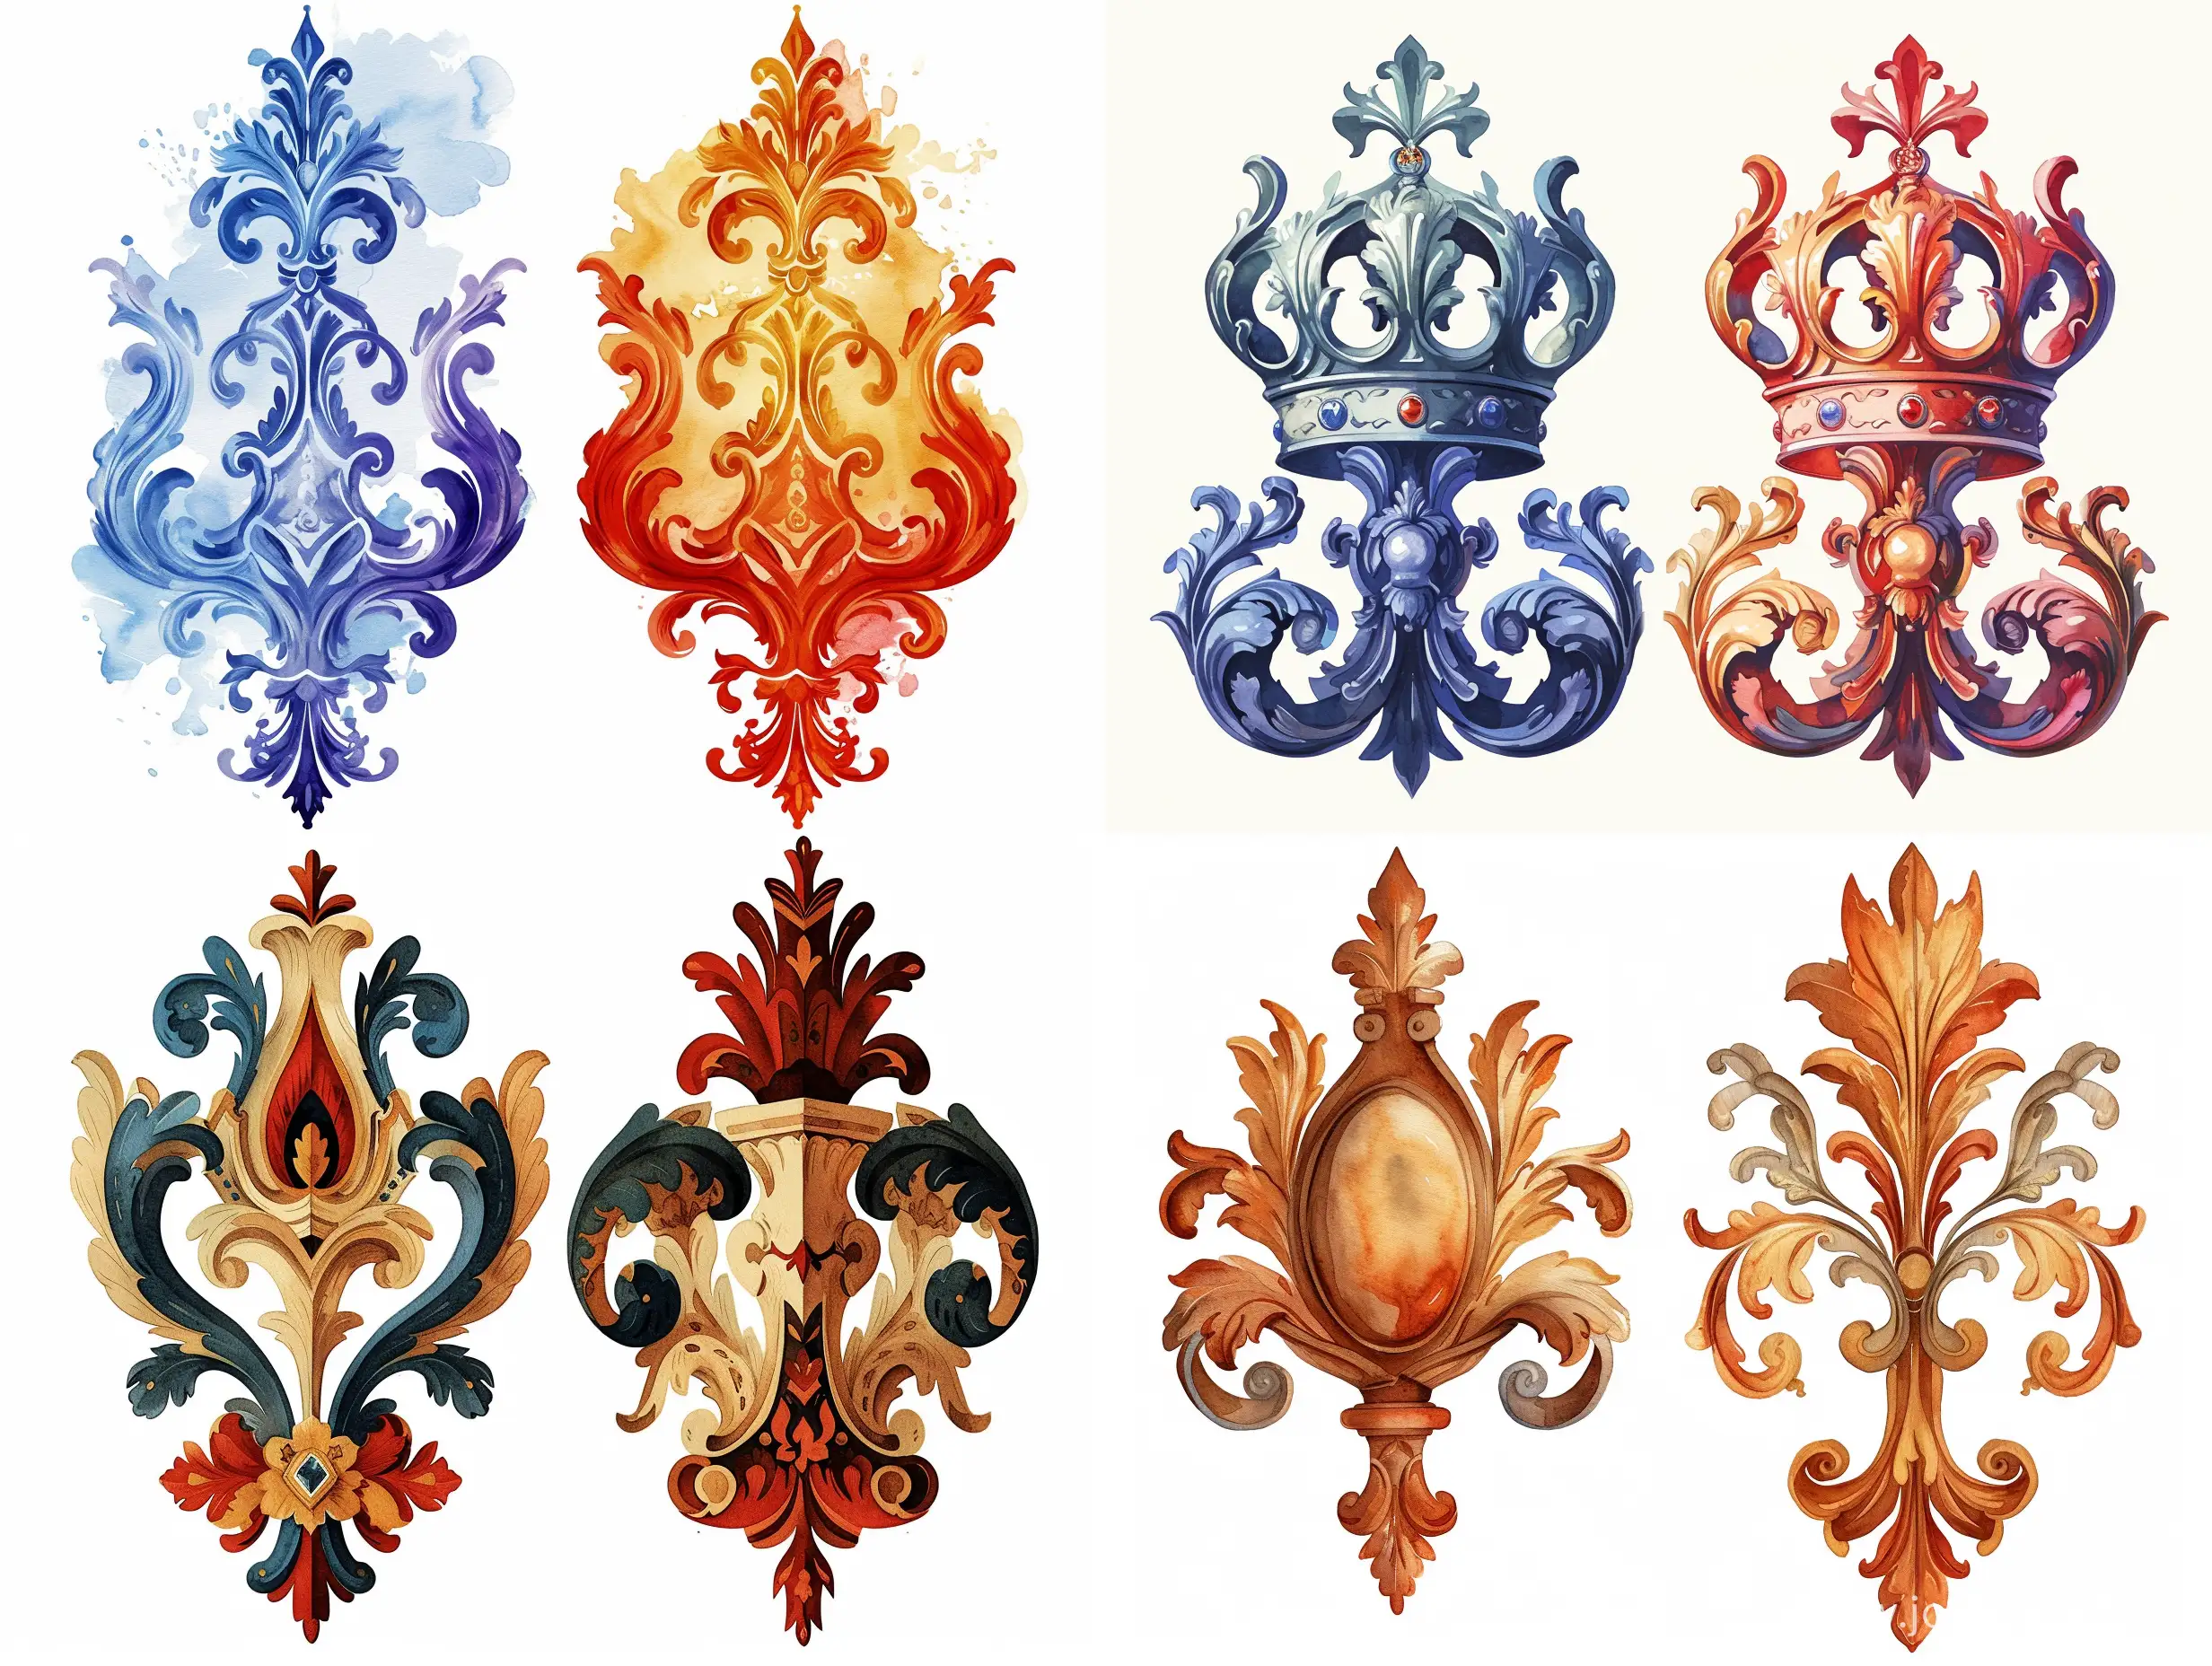 Renaissance-King-Ornament-Variants-Reflective-Decorative-Watercolor-Illustrations